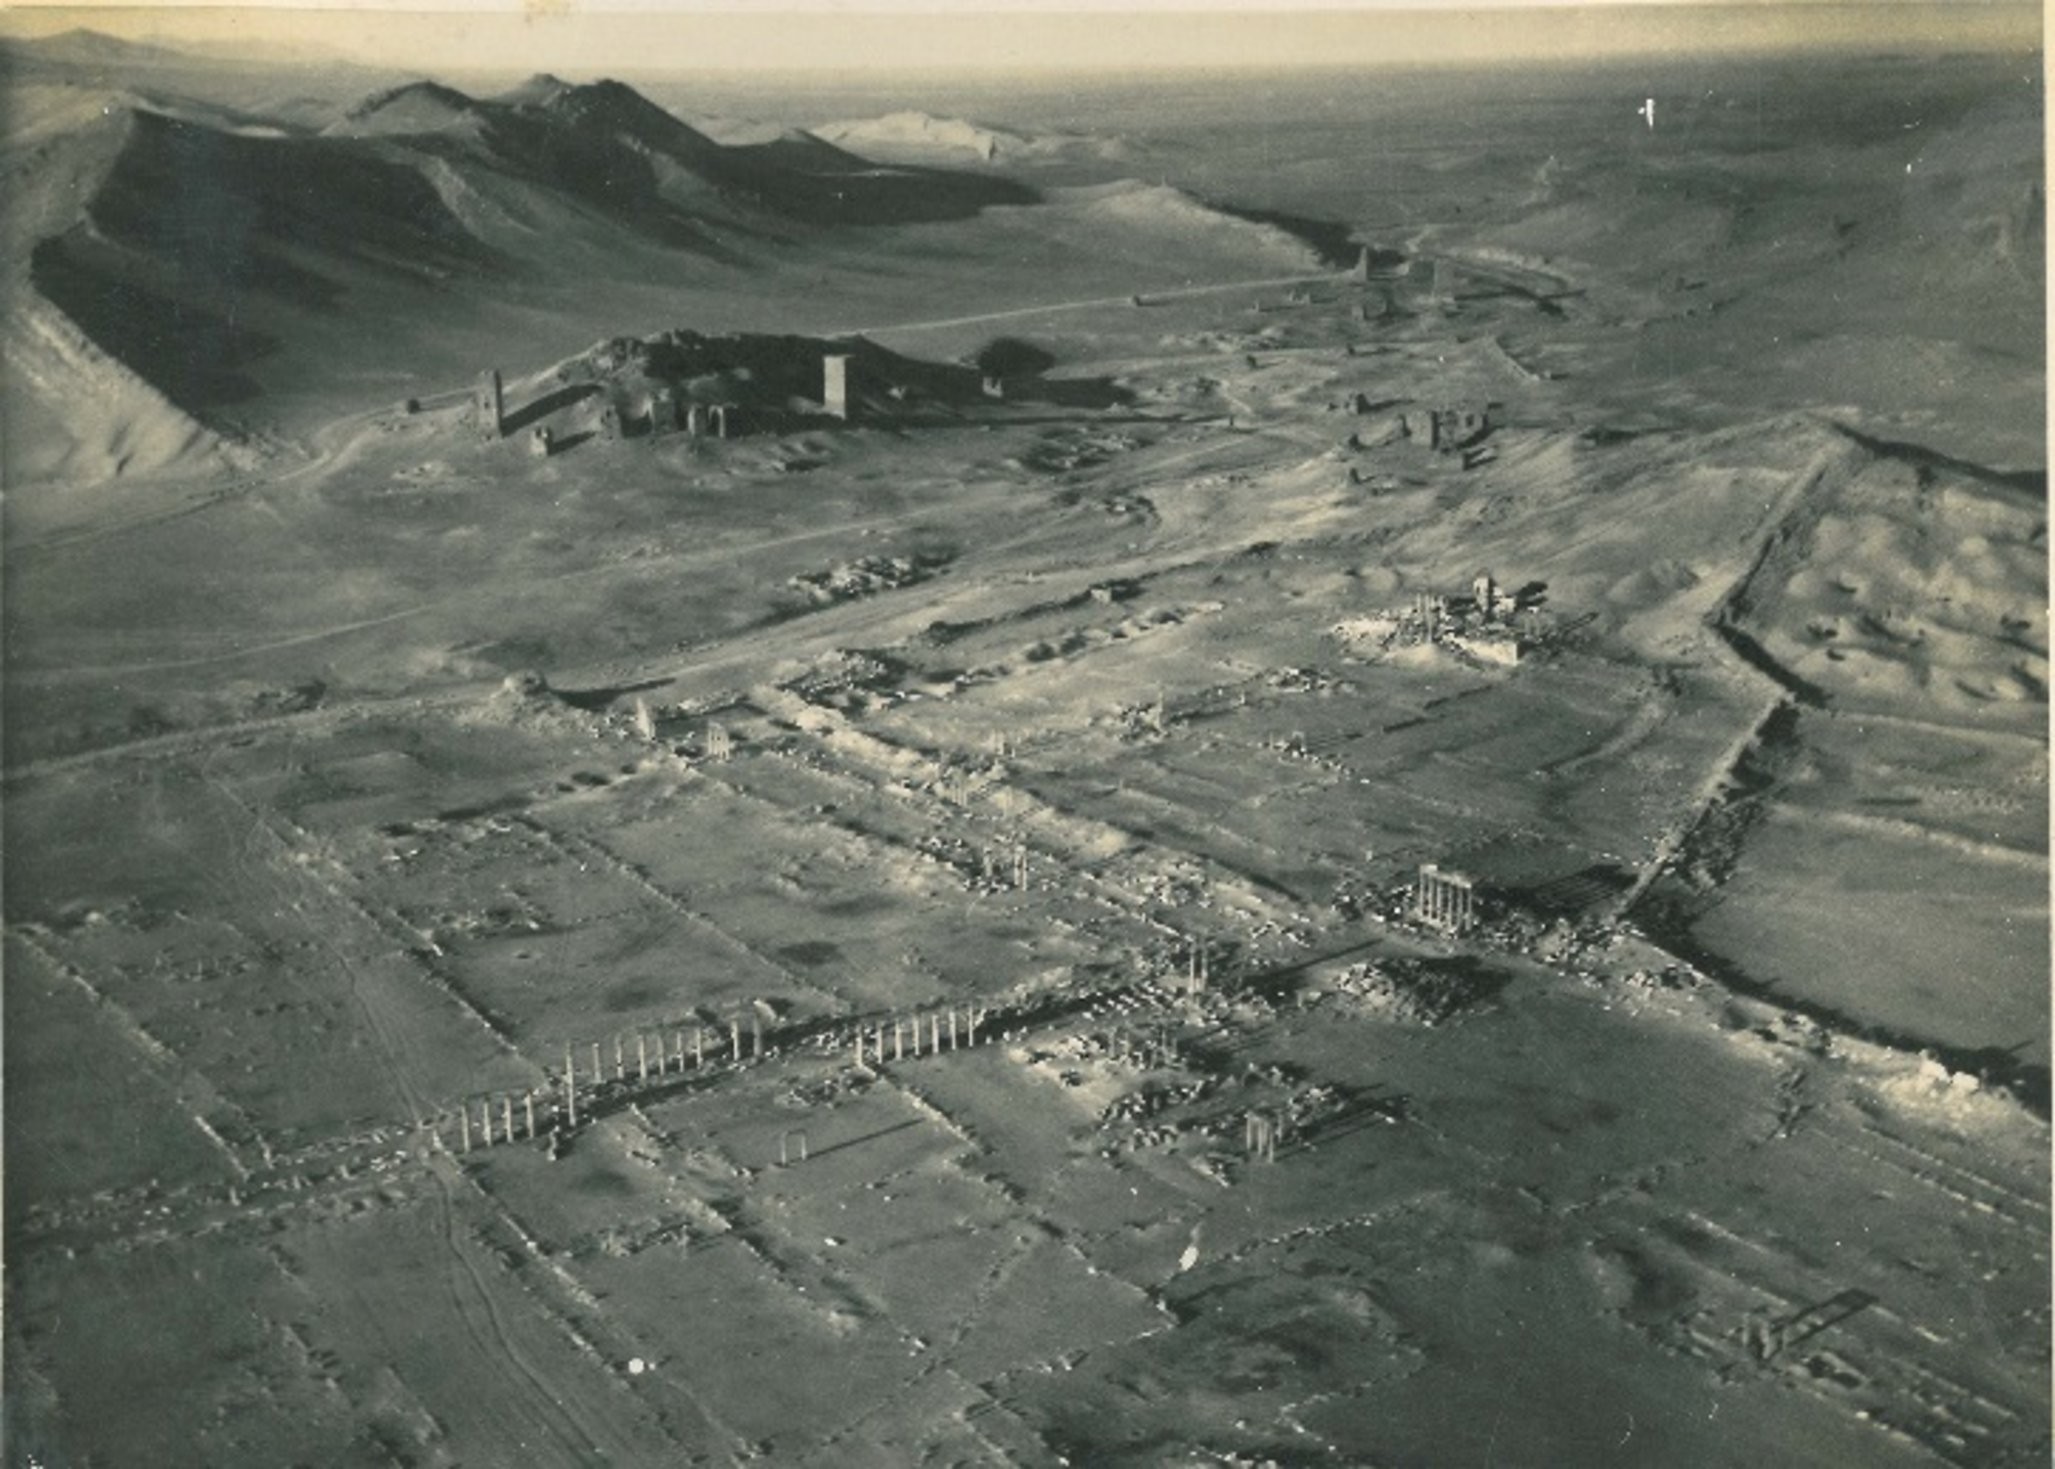 Palmira e seus arredores imediatos, na década de 1920  (Foto: Universidade de Aarhus/ Rubina Raja and Palmyra Portrait Project.)